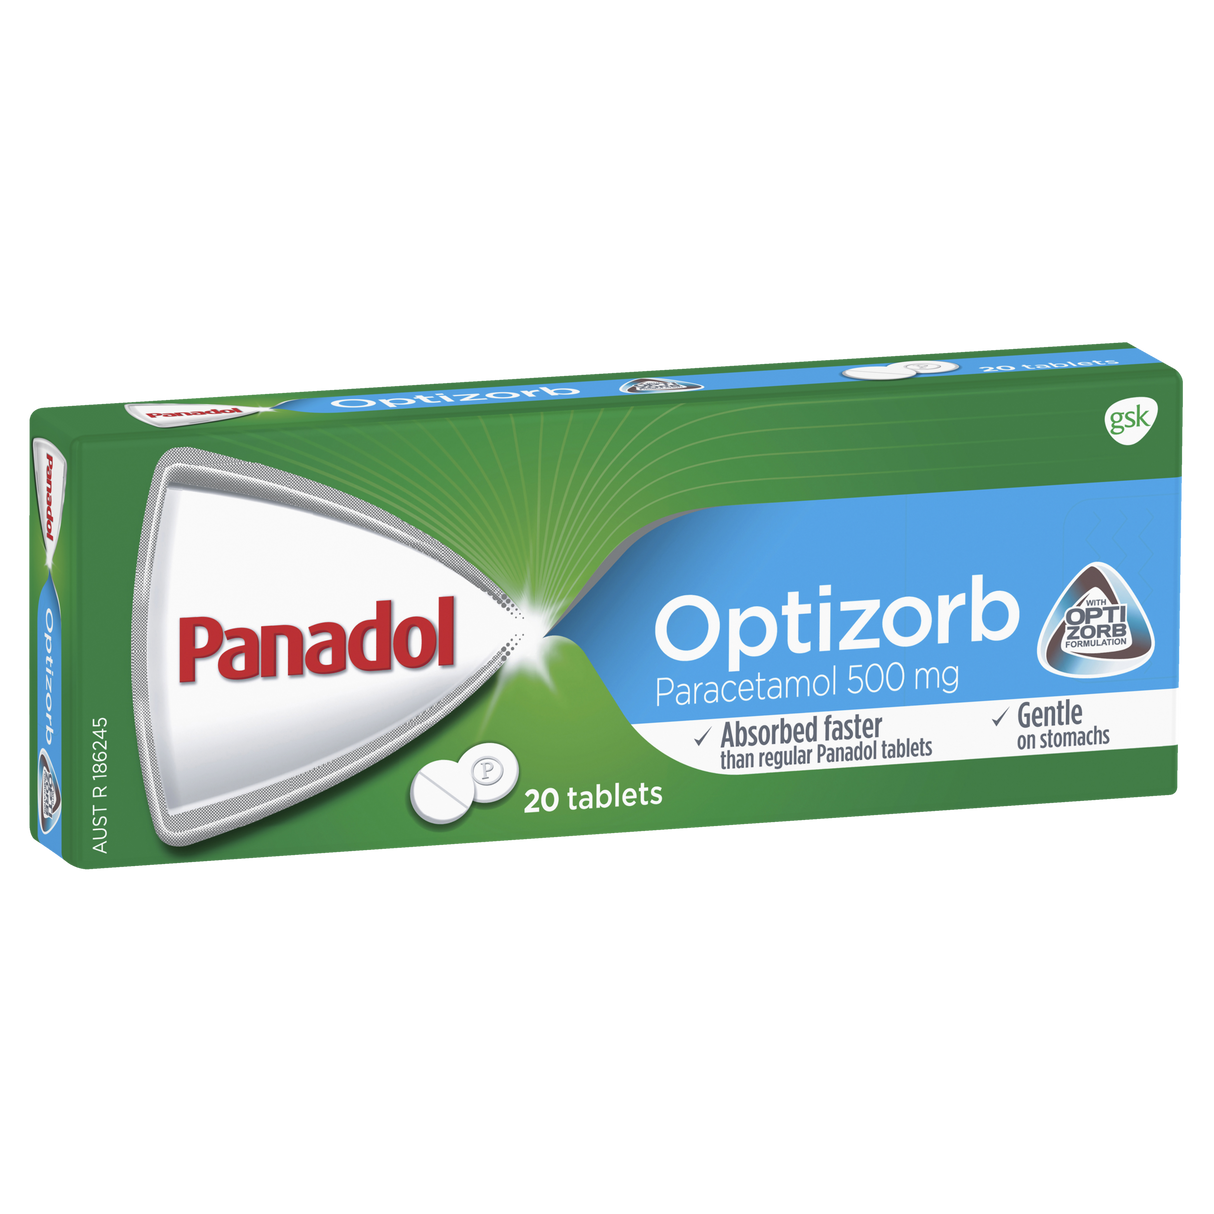 Panadol With OptiZorb Paracetamol 500mg Tablets 20 Pack